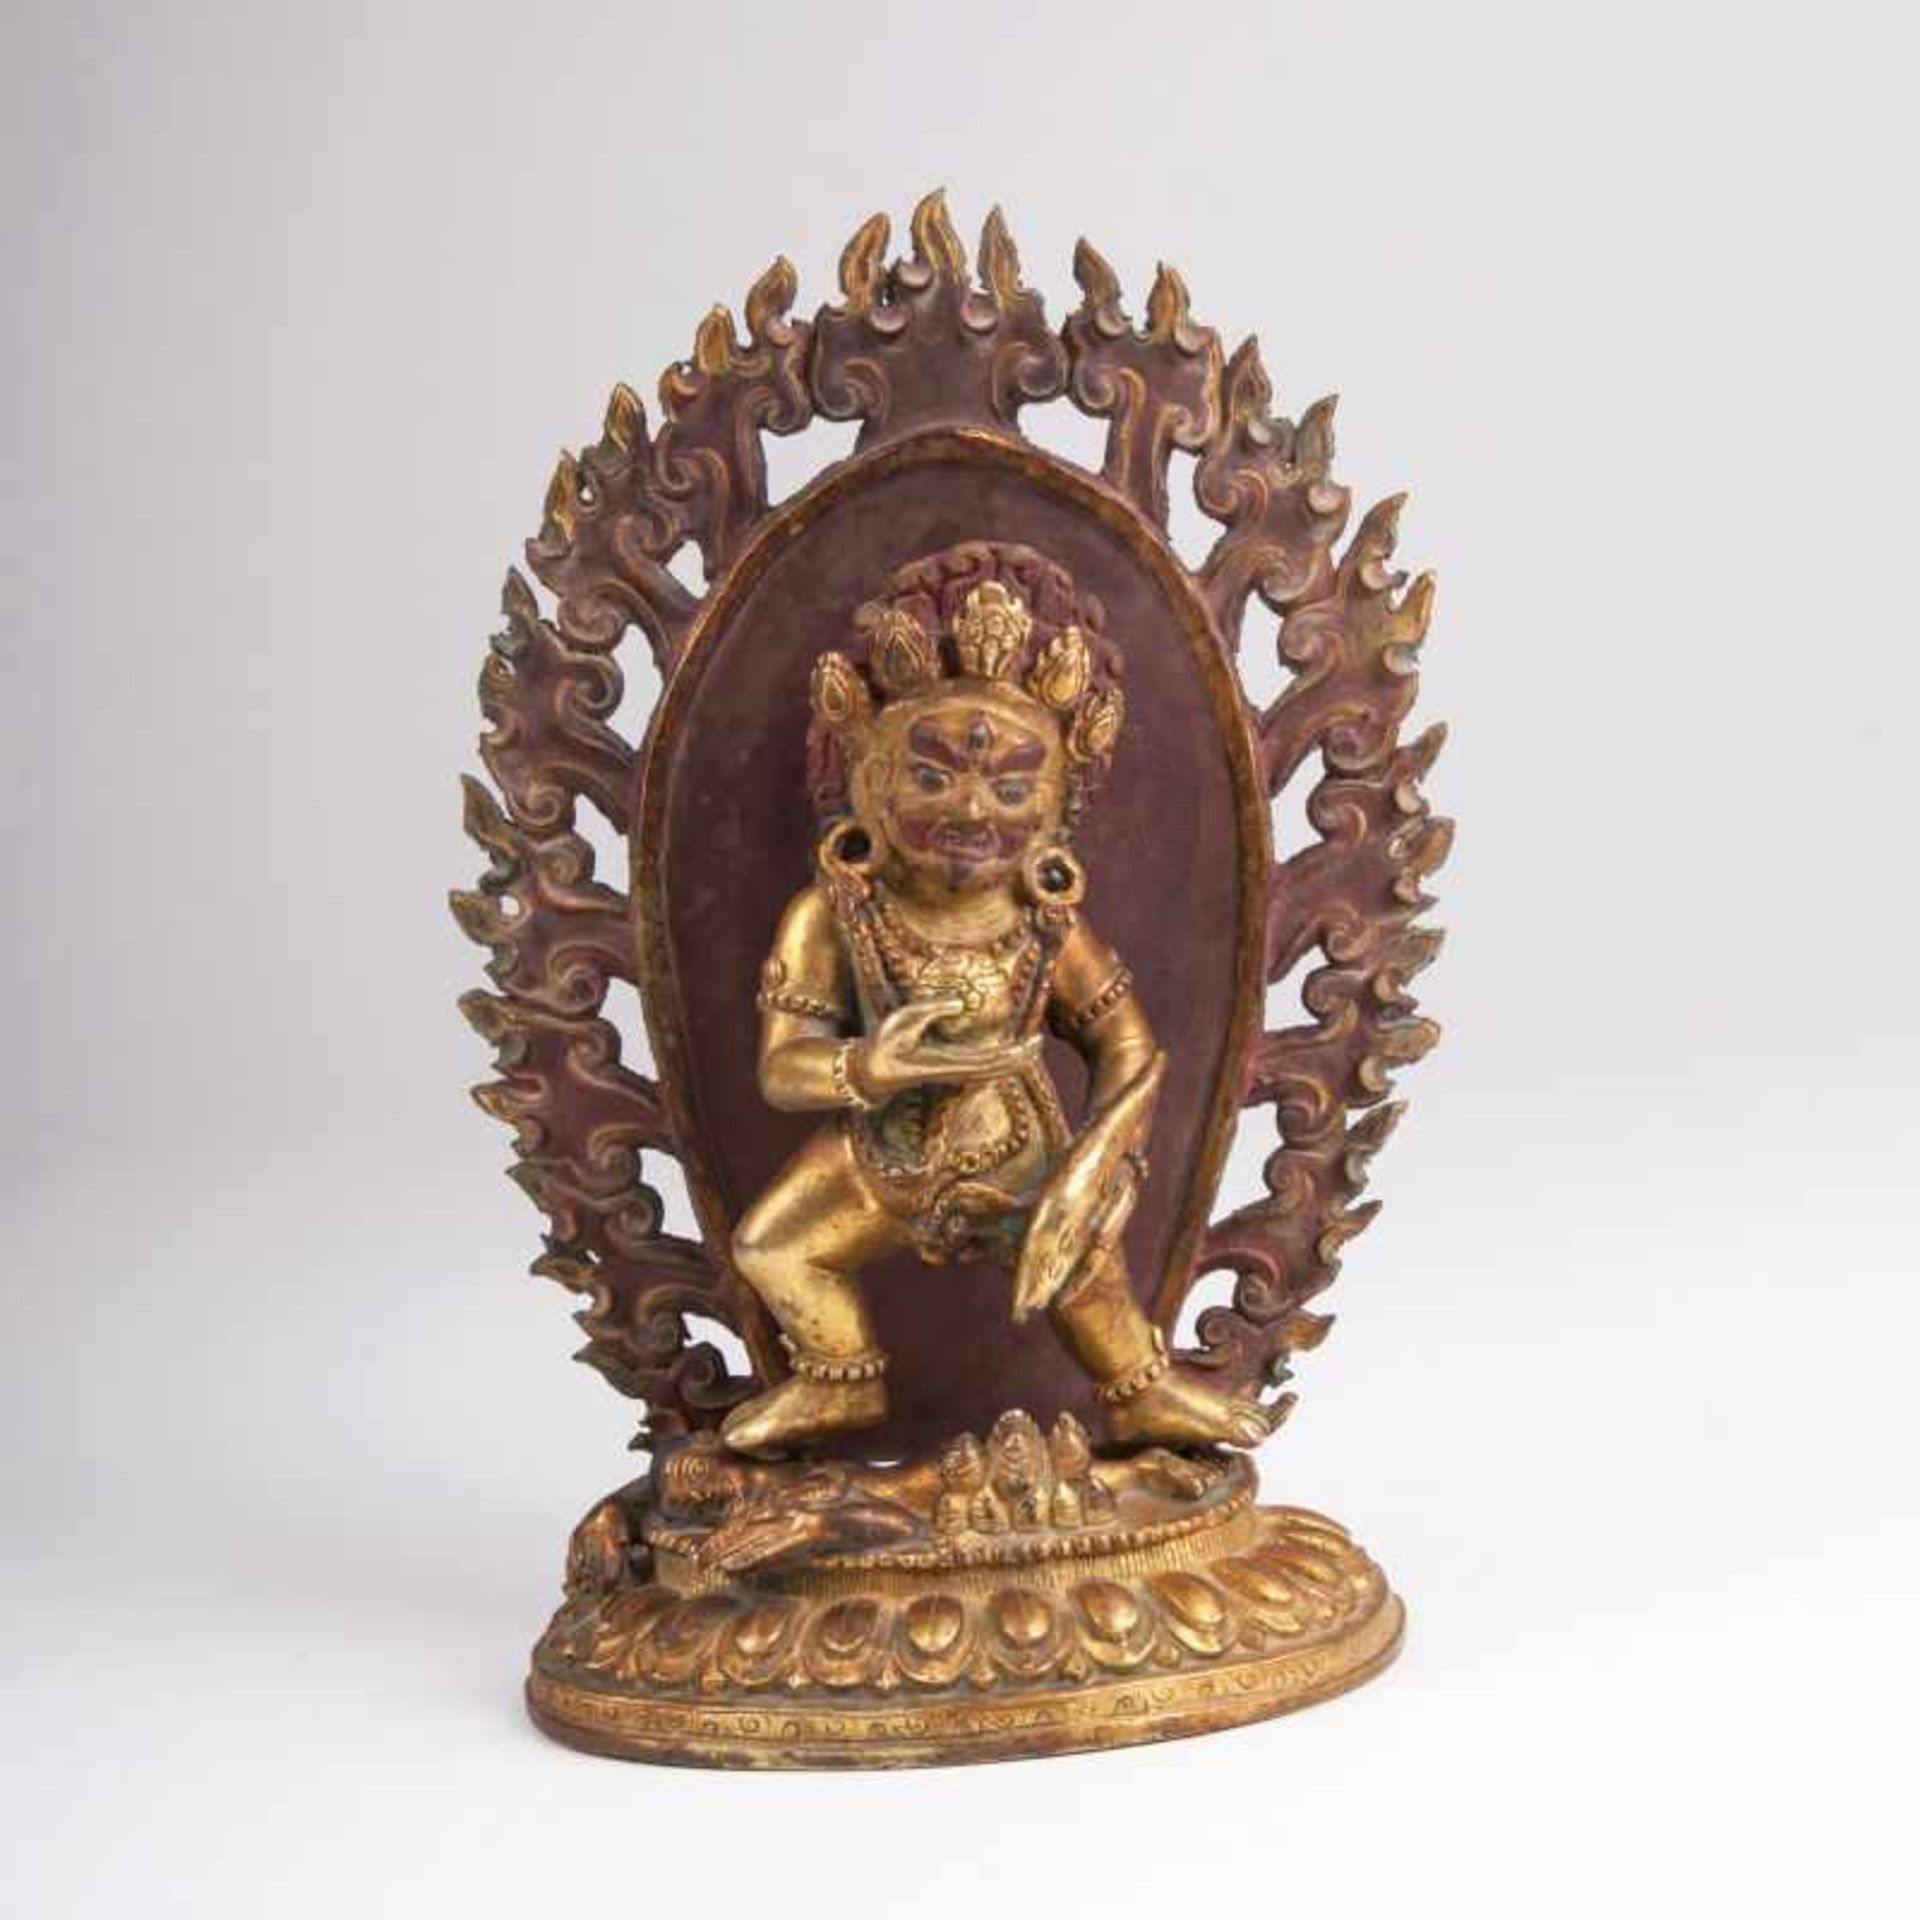 Bronze-Skulptur 'Schwarzer Jambhala' Tibet, 19. Jh. Bronze, feuervergoldet, polychrome und